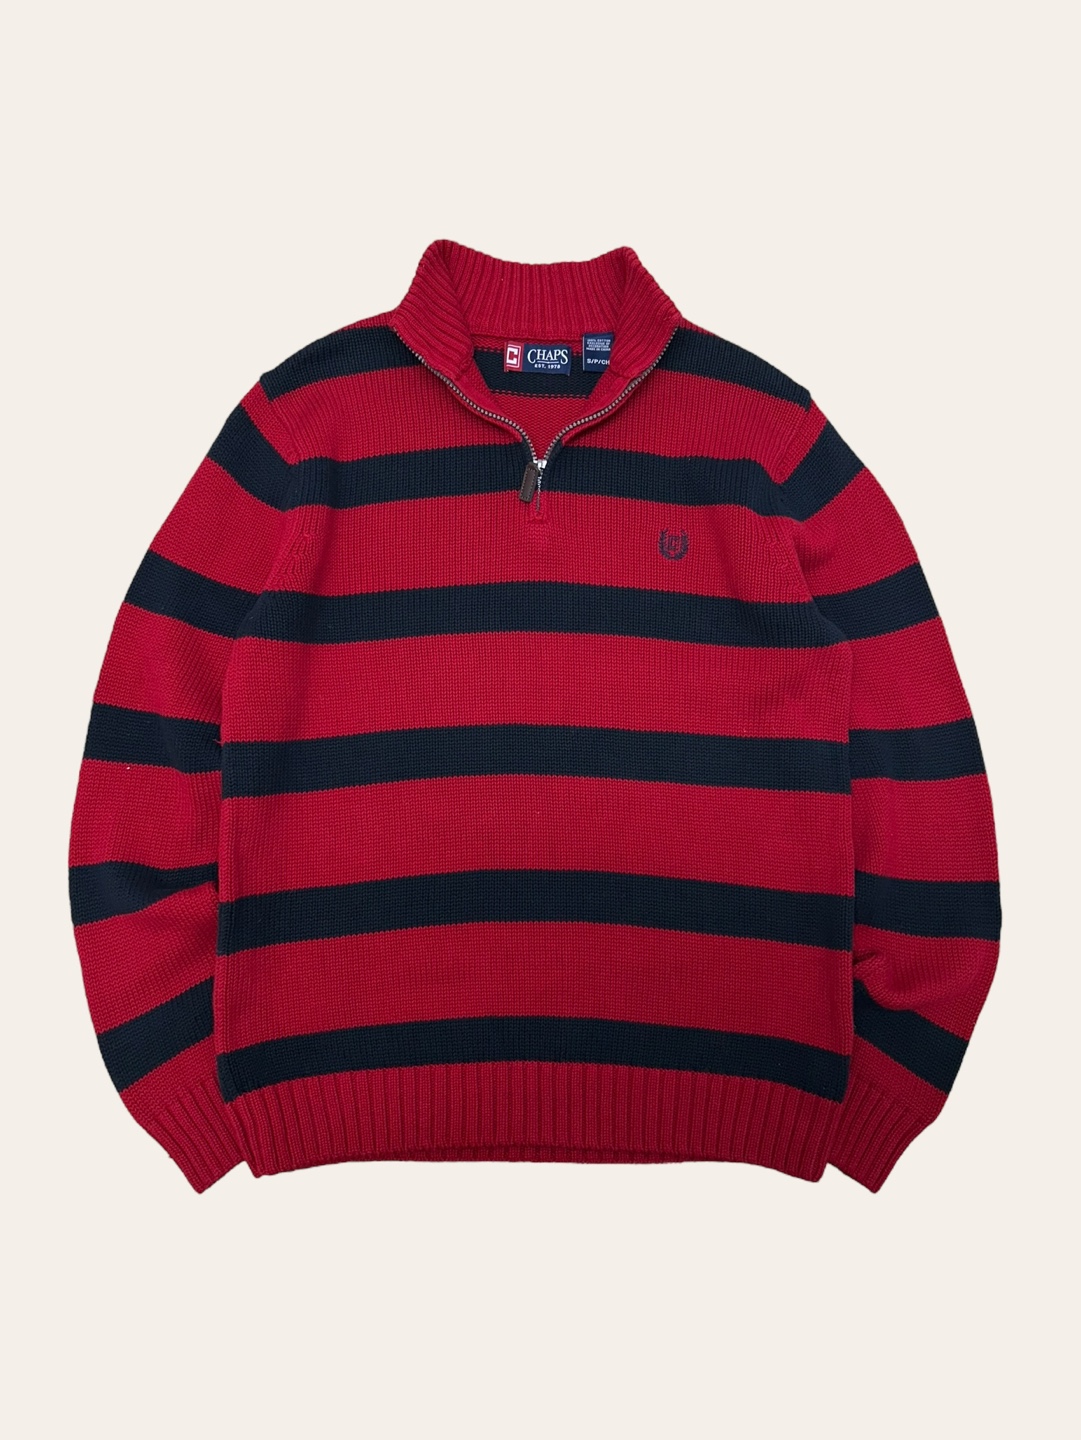 Chaps ralph lauren black/red stripe cotton pullover S